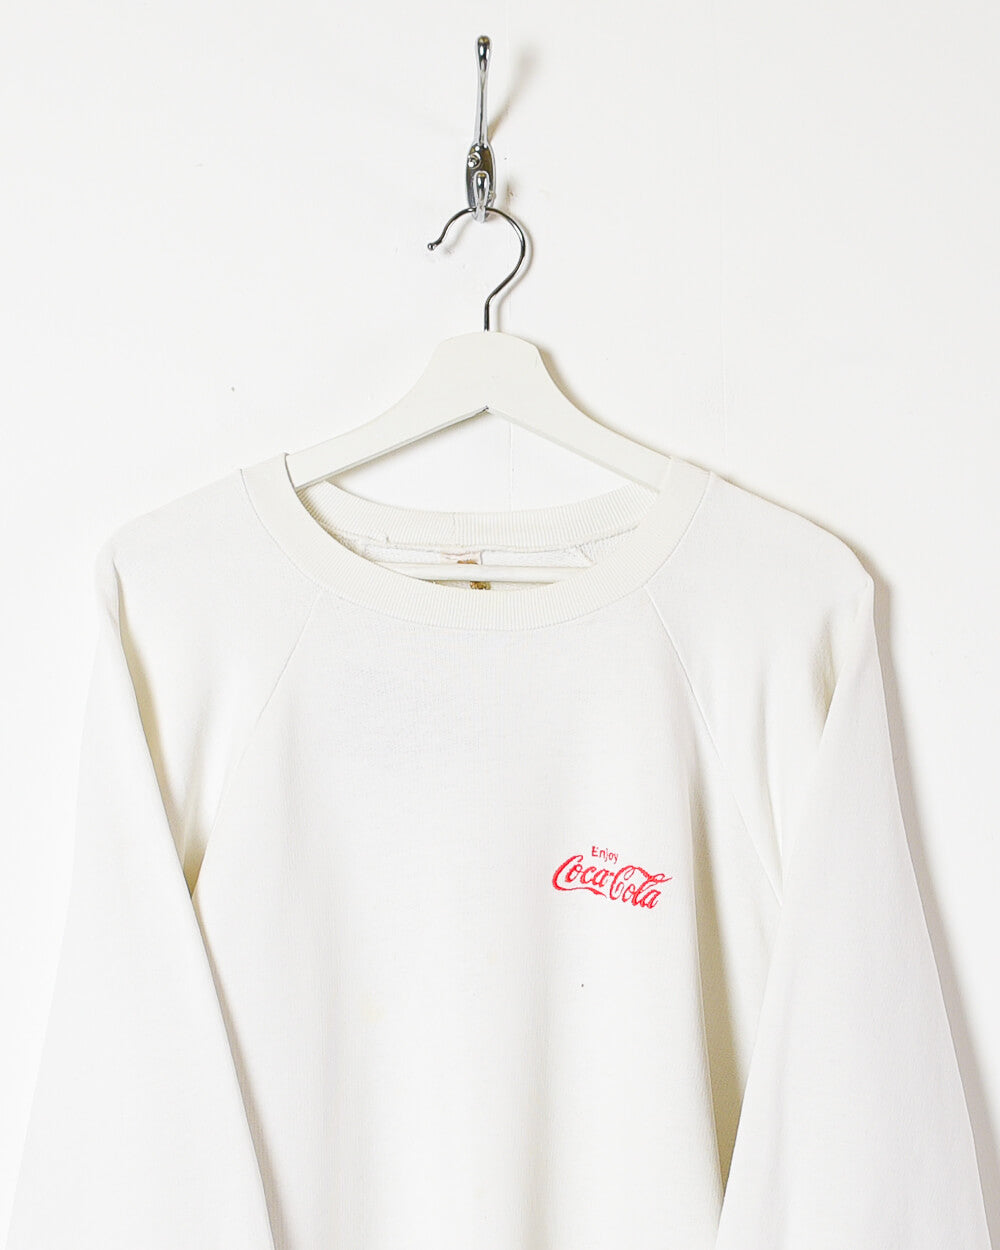 White Enjoy Coca-Cola Sweatshirt - Large